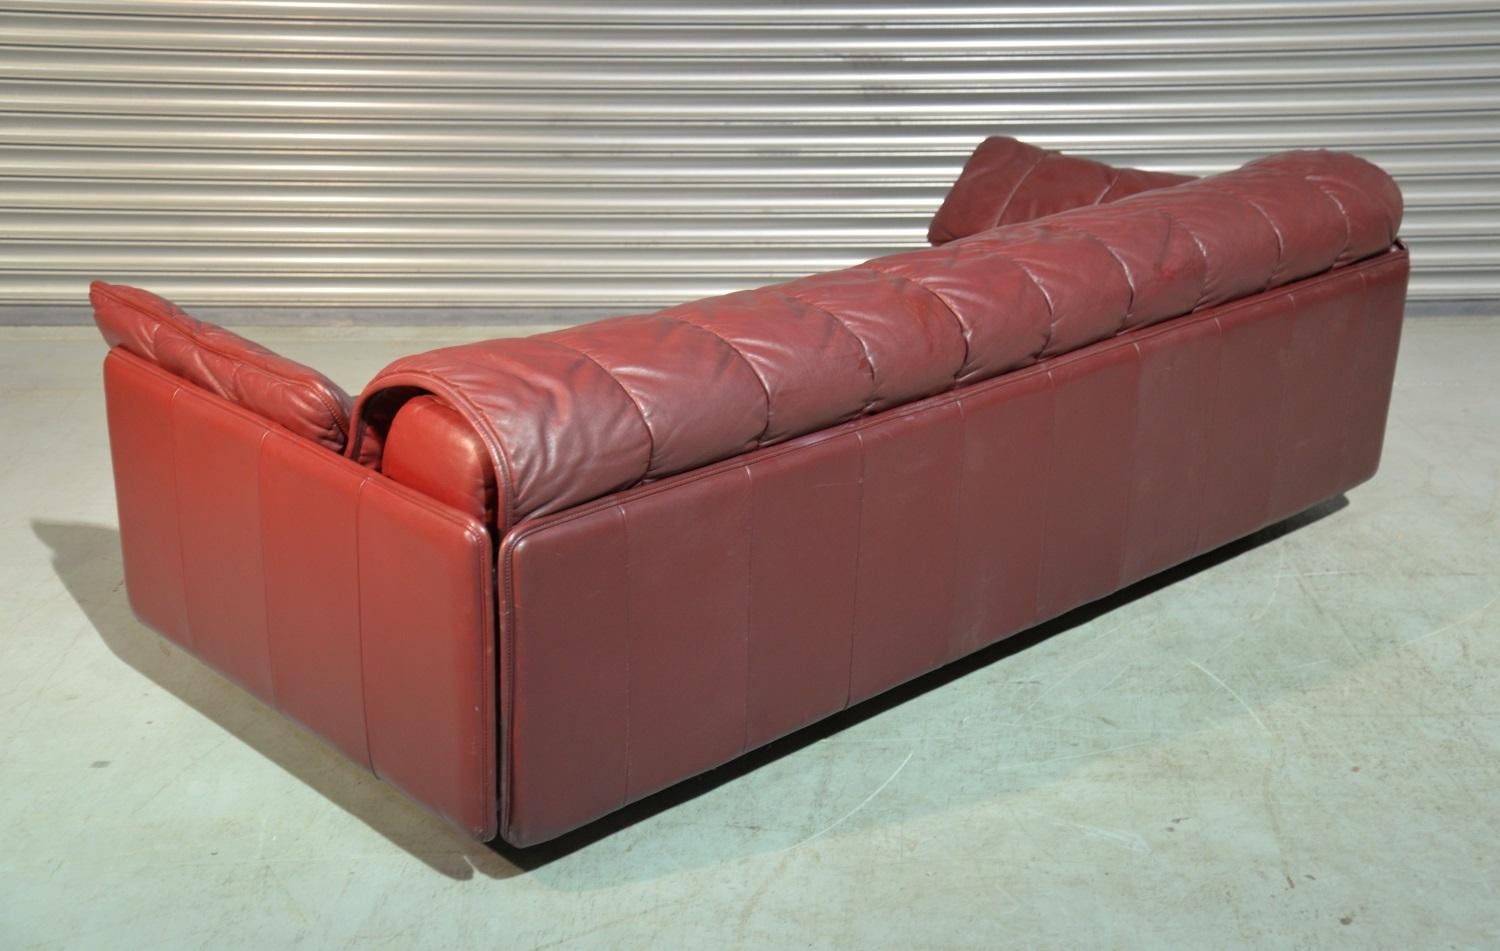 Vintage De Sede Patchwork Leather Sofa / Daybed, Switzerland, 1970s For Sale 1